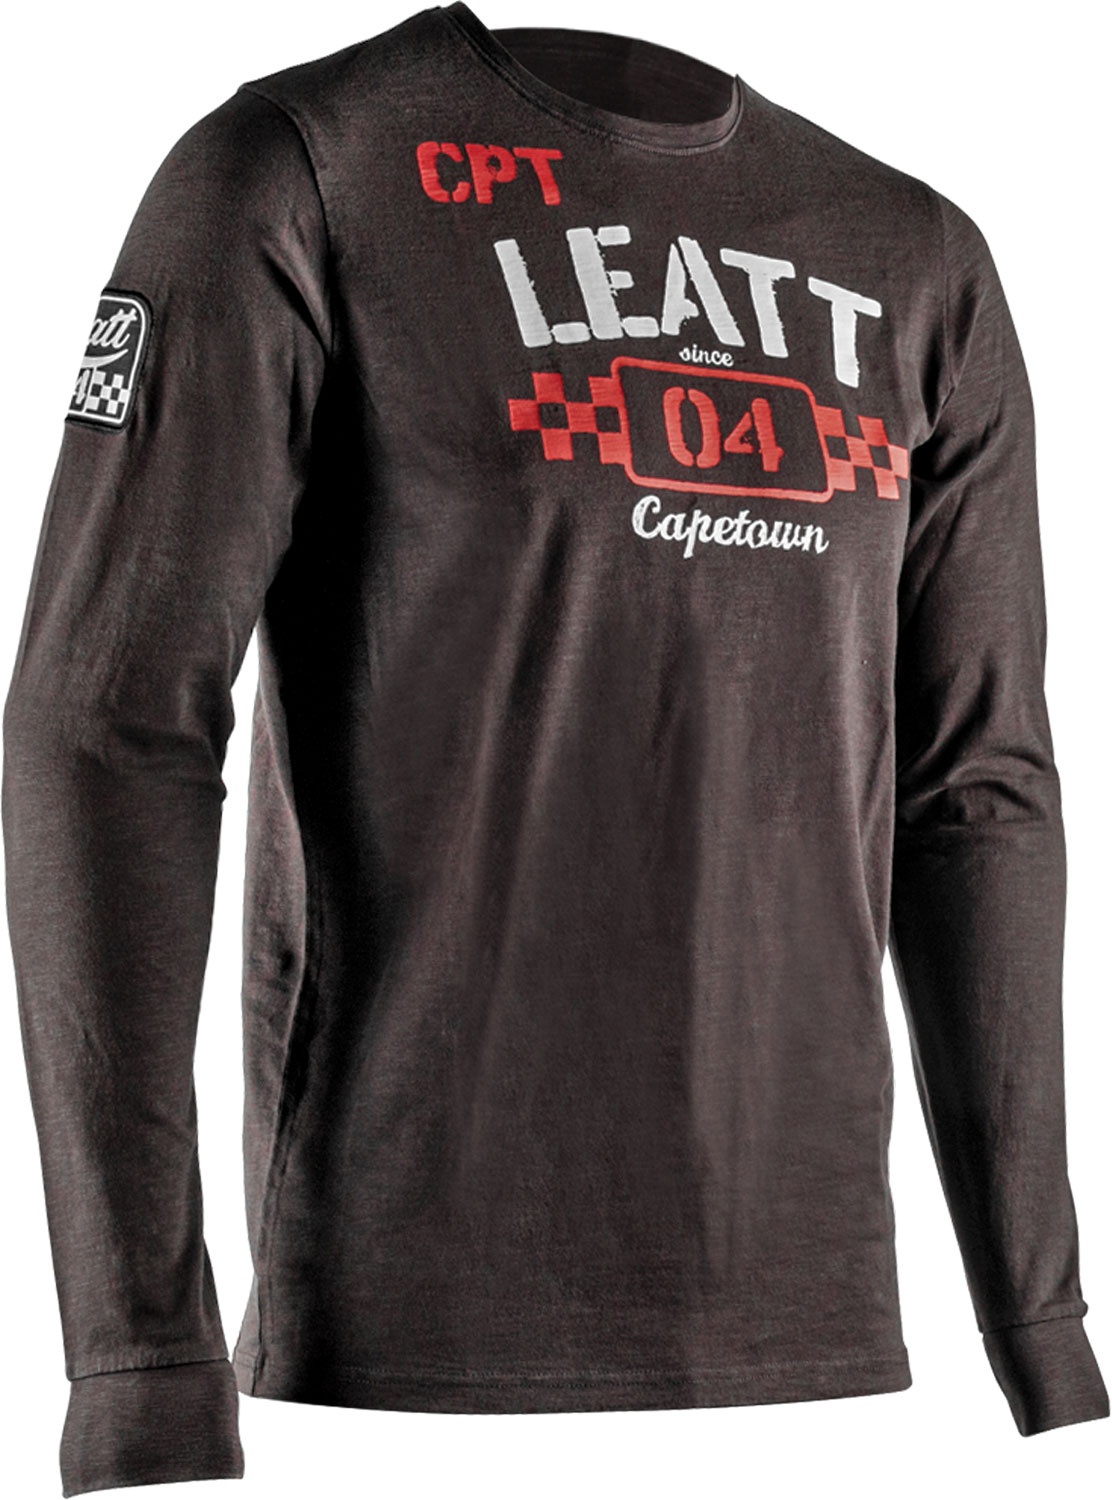 Leatt Heritage S22, sweat-shirt - Noir/Rouge/Blanc - S